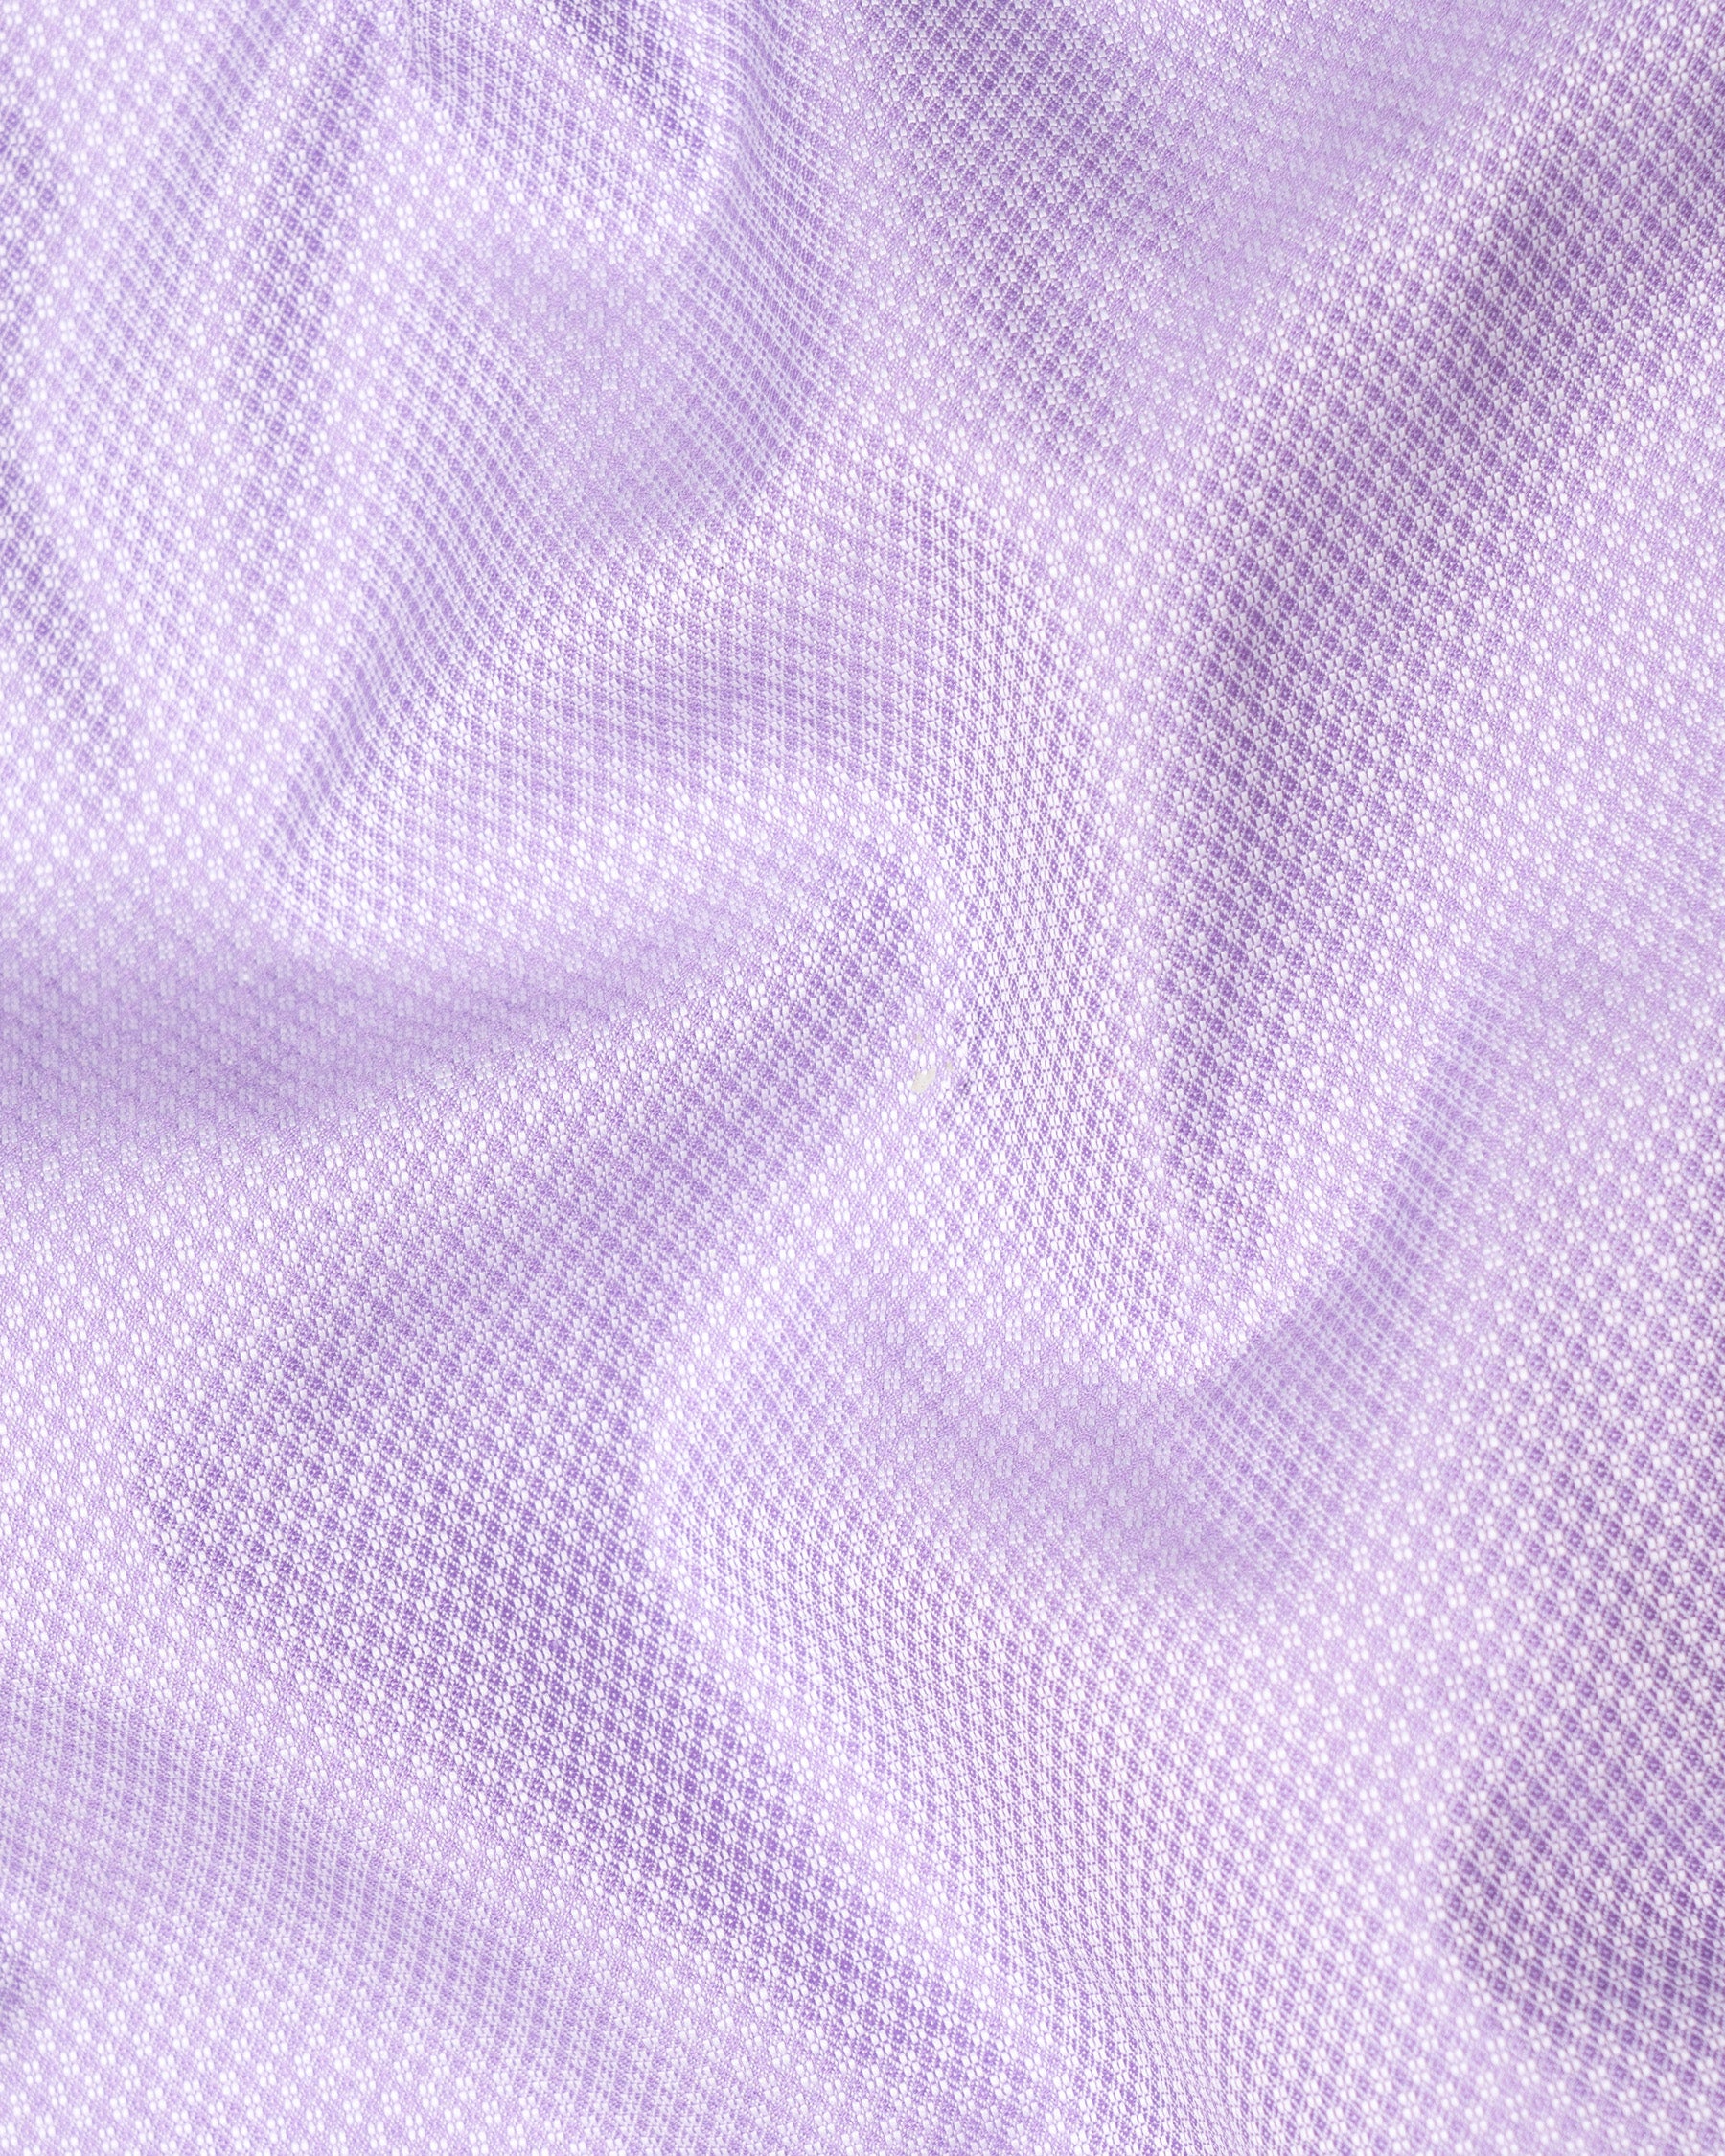 Light Purple Dobby Textured Premium Giza Cotton Shirt 5357-CA-38, 5357-CA-H-38, 5357-CA-39, 5357-CA-H-39, 5357-CA-40, 5357-CA-H-40, 5357-CA-42, 5357-CA-H-42, 5357-CA-44, 5357-CA-H-44, 5357-CA-46, 5357-CA-H-46, 5357-CA-48, 5357-CA-H-48, 5357-CA-50, 5357-CA-H-50, 5357-CA-52, 5357-CA-H-52